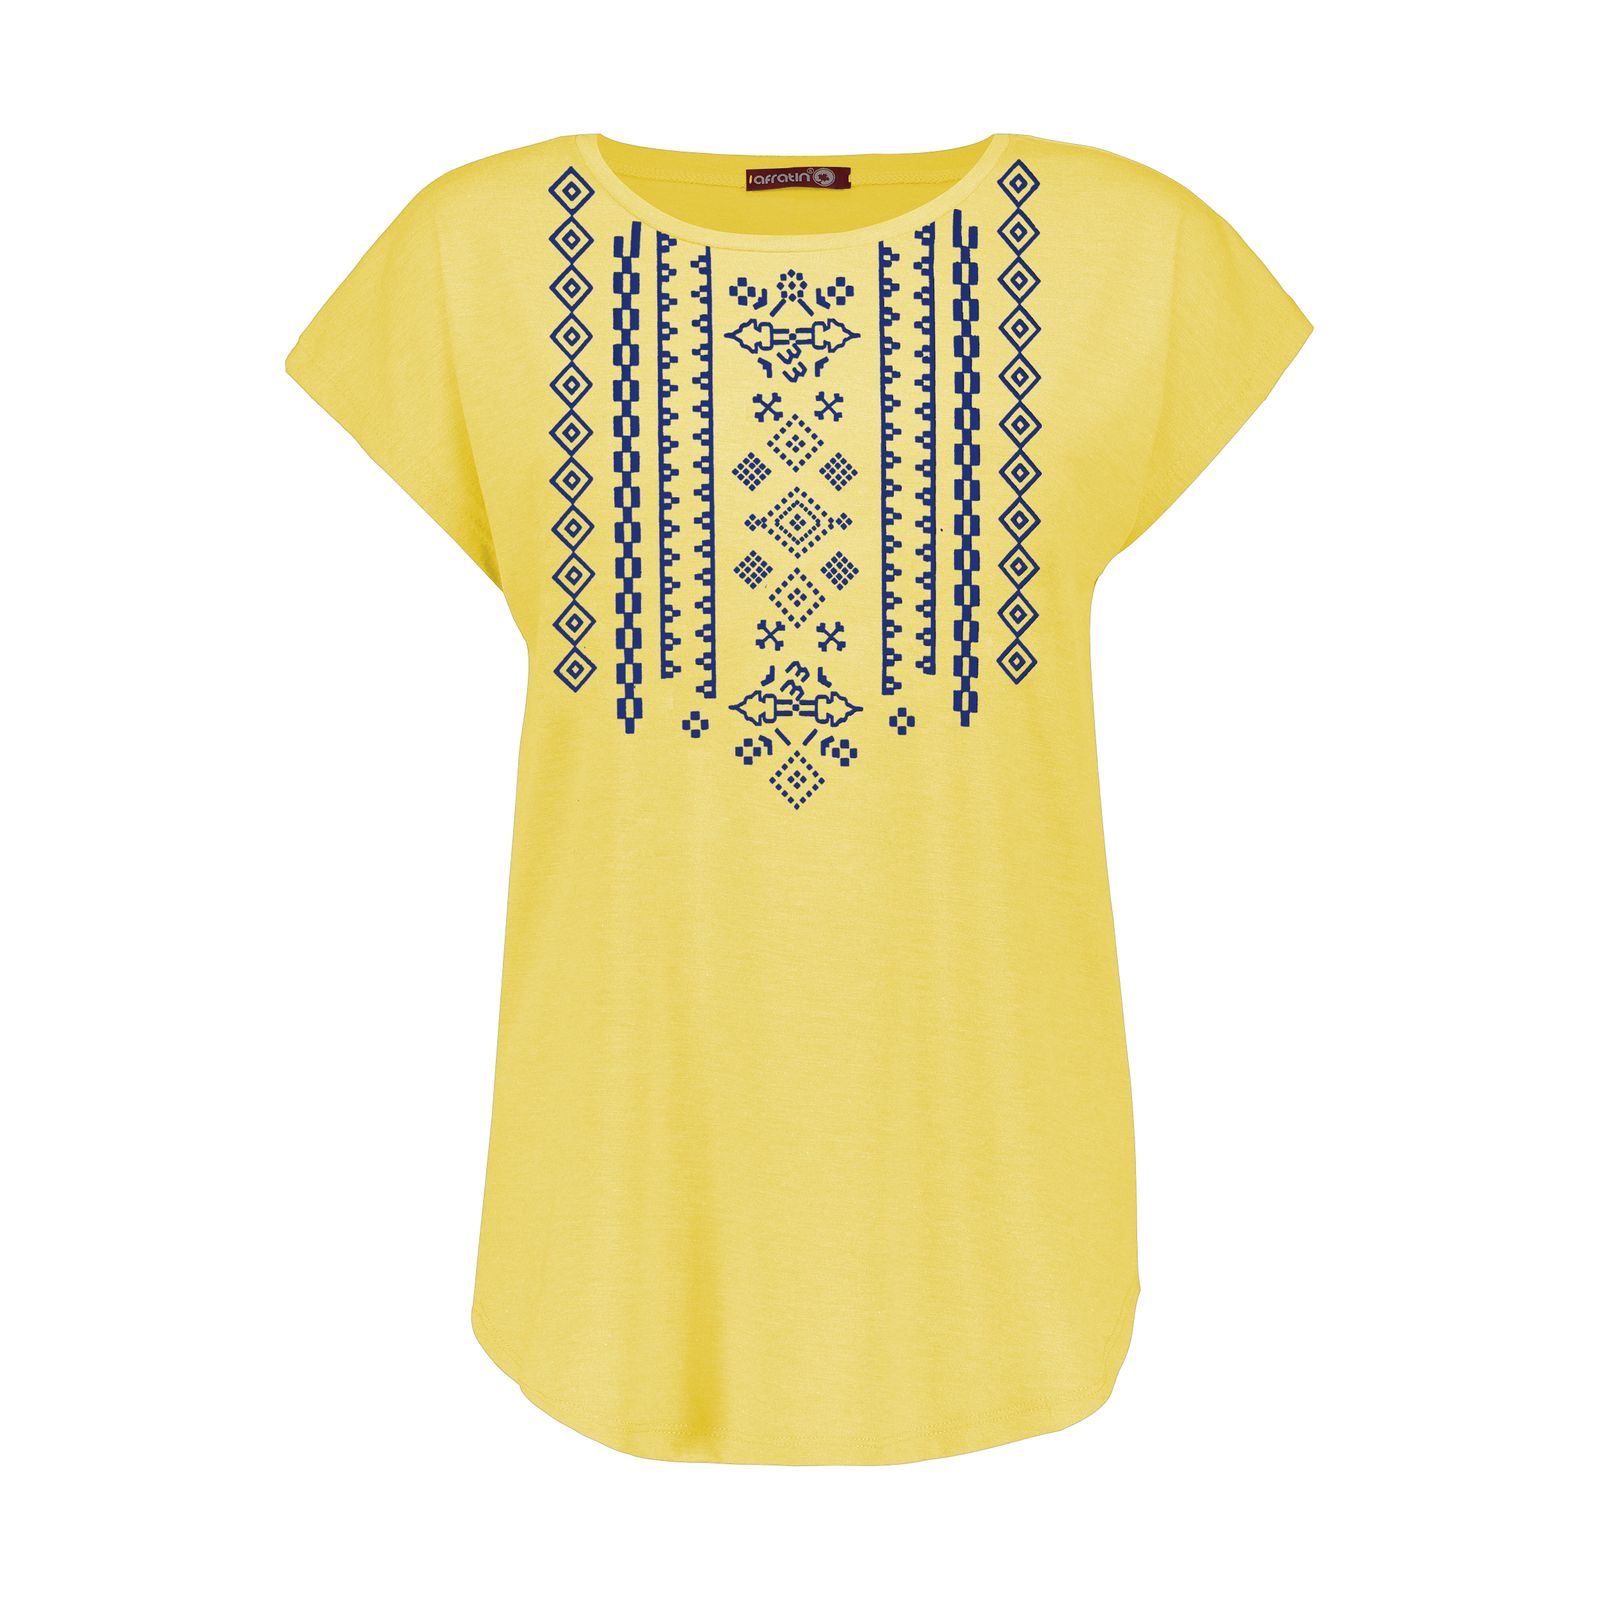 تی شرت زنانه افراتین کد 2551 رنگ زرد -  - 2